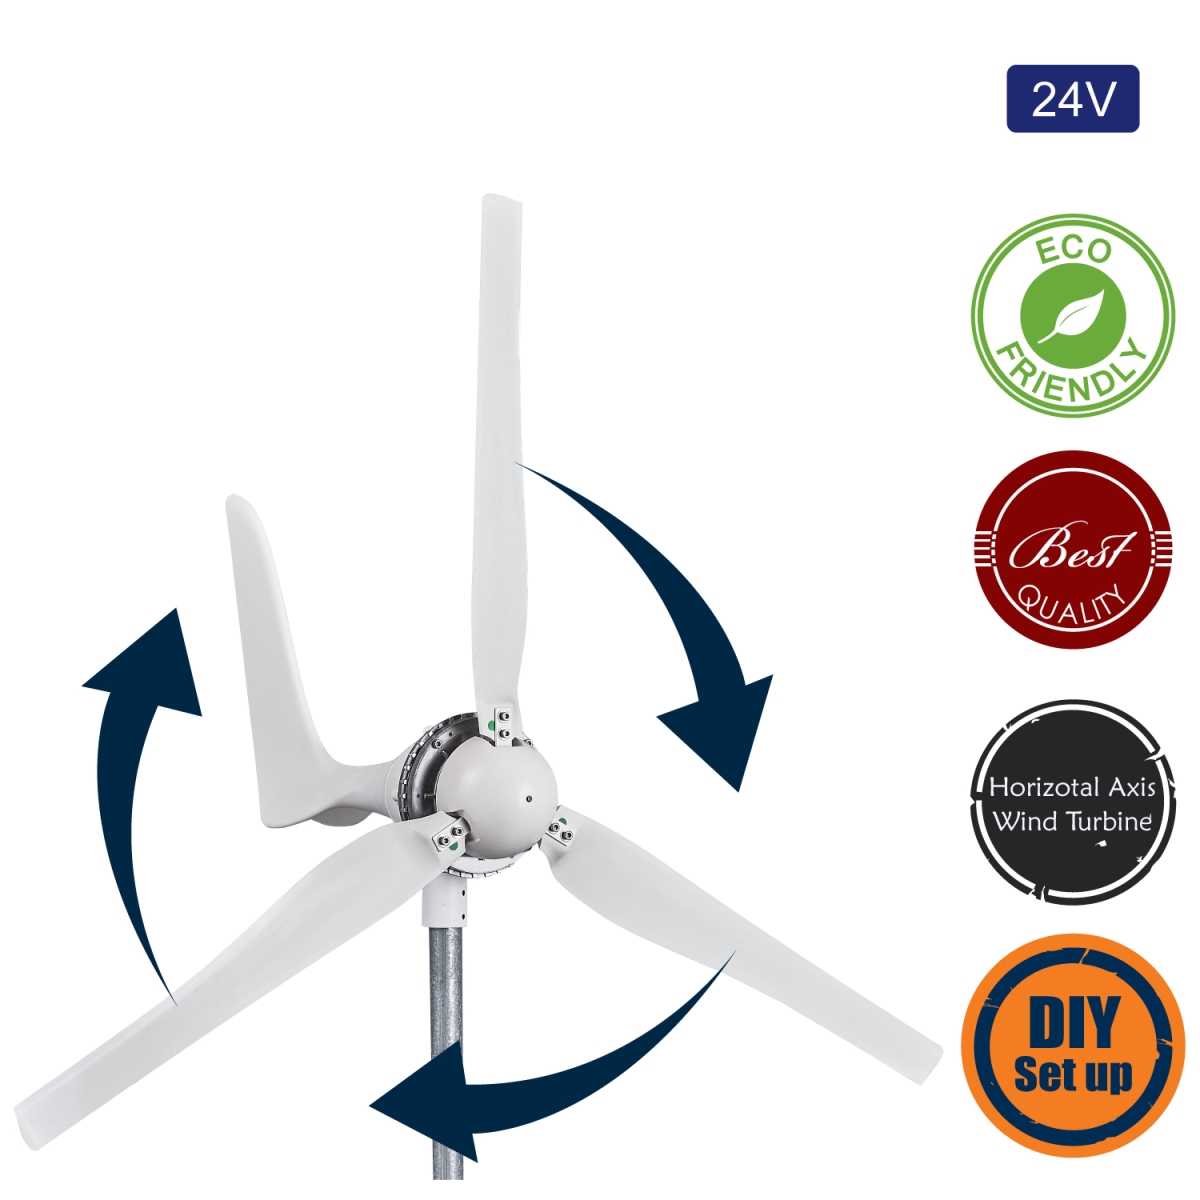 Da1200a9cb Windmill 1200w 24v 42a Wind Turbine Generator Kit - White